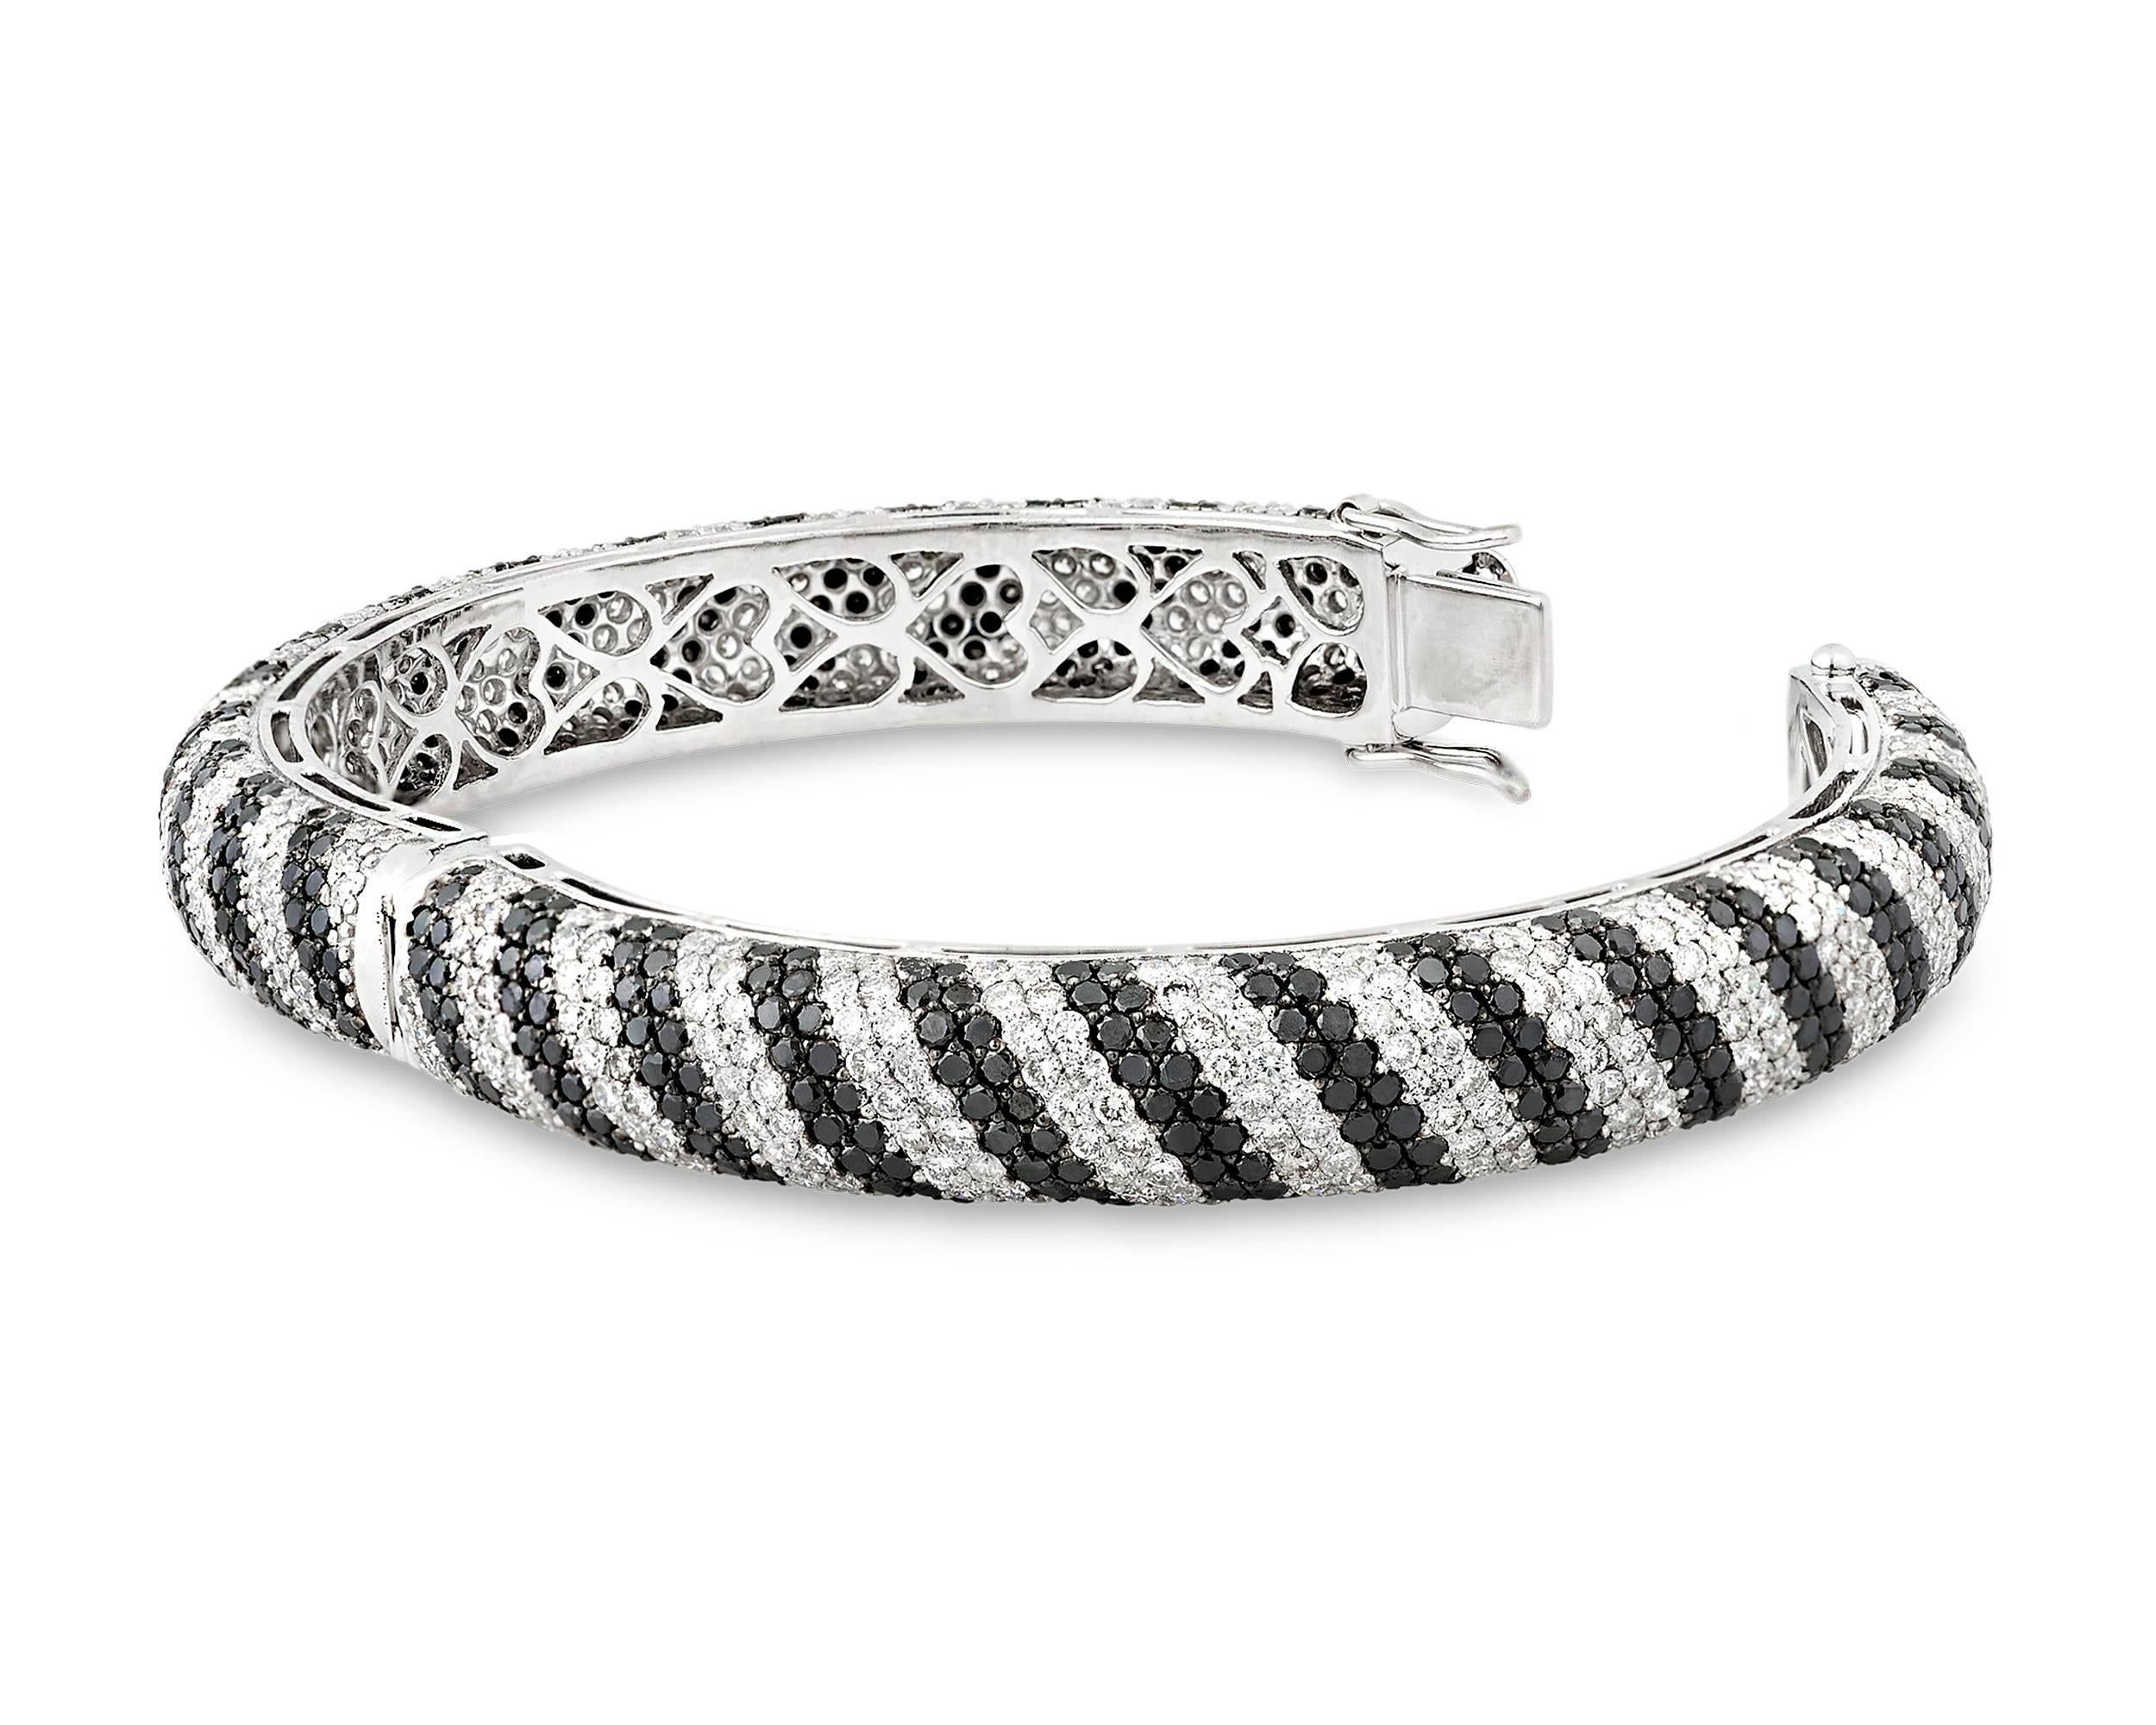 Modern White and Black Diamond Bangle Bracelet 19.88 Carat